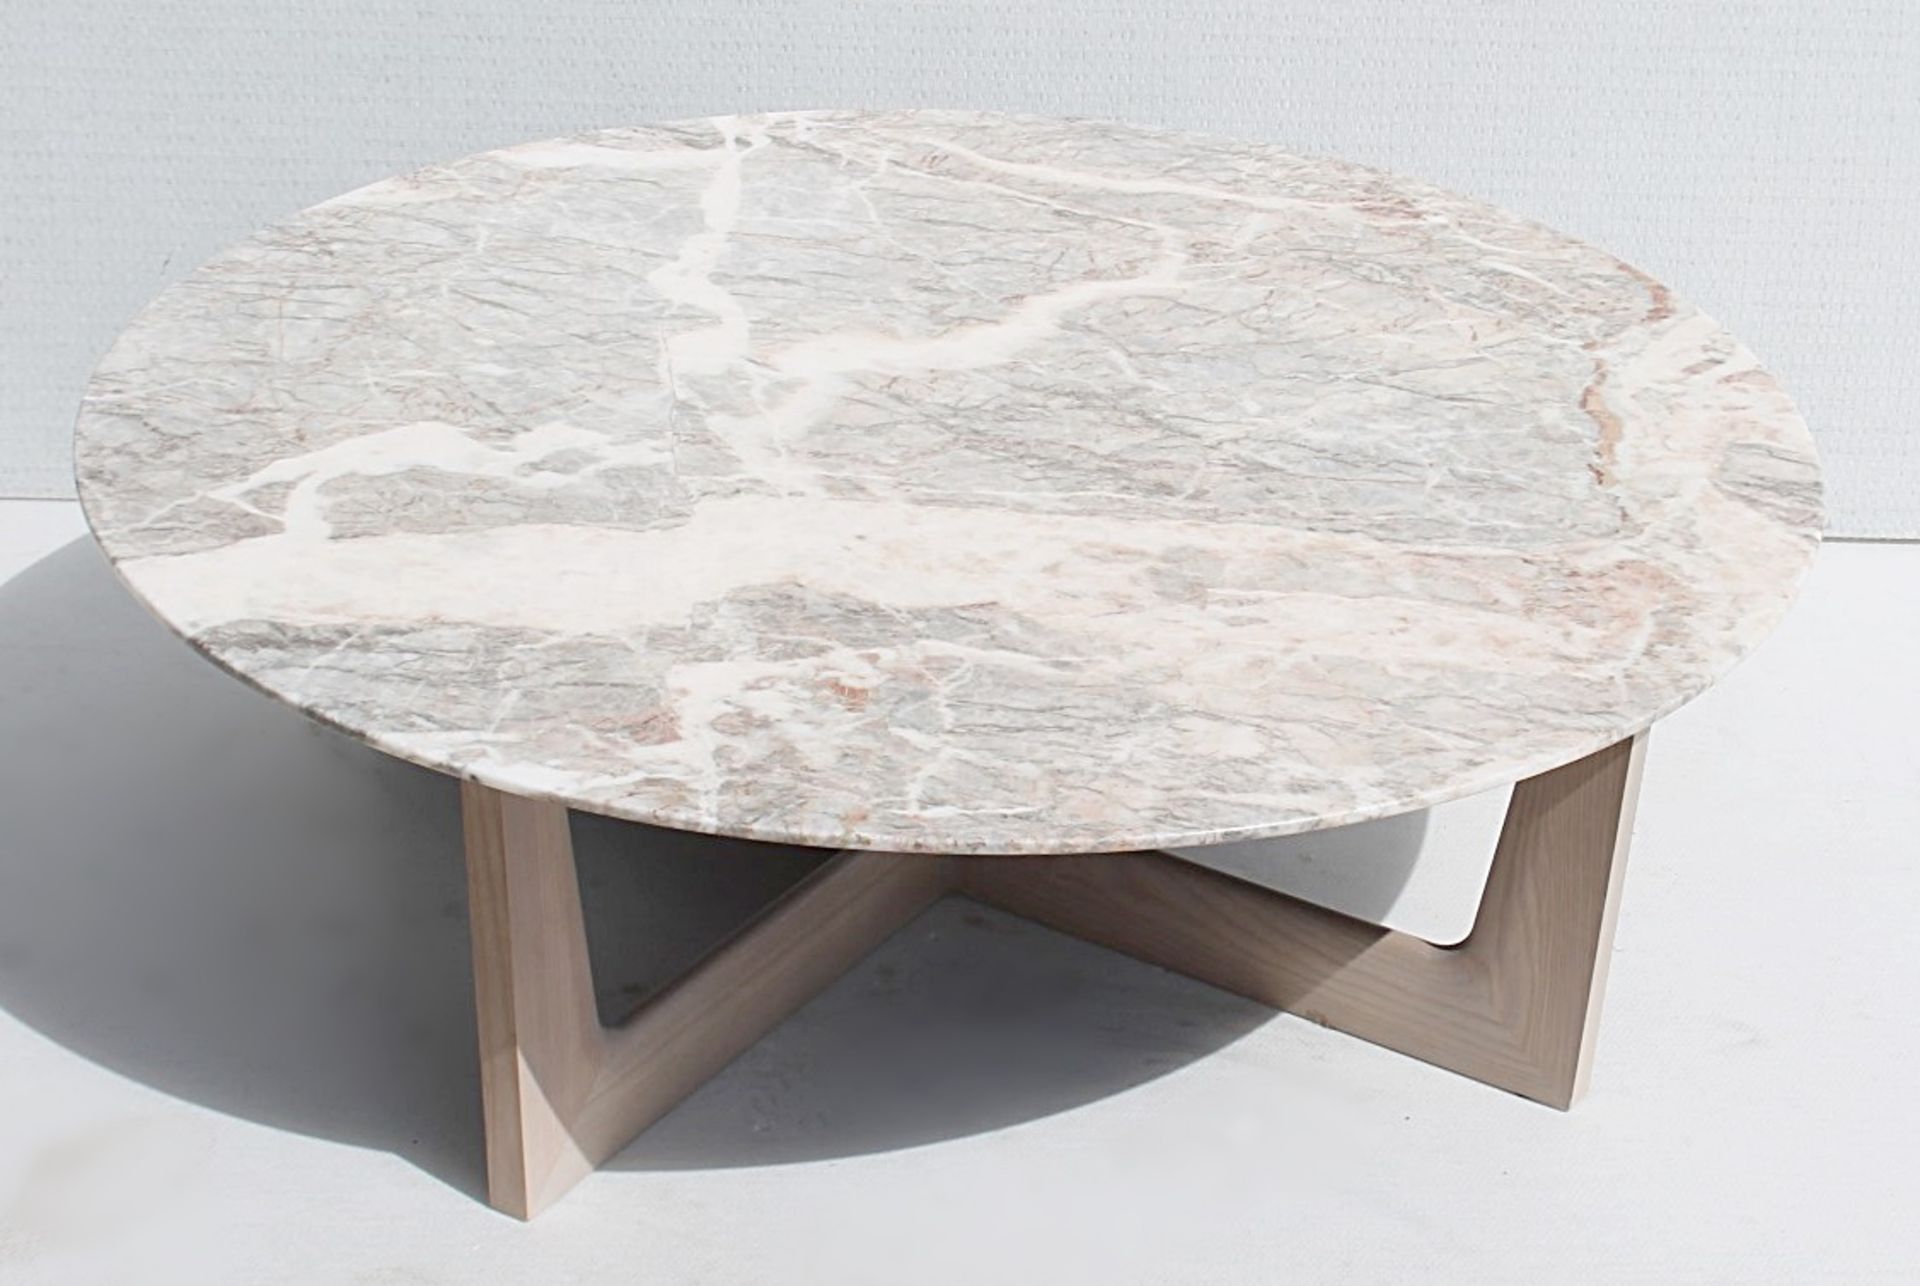 1 x POLTRONA FRAU 'Ilary' Italian Designer Ø110 Marble Coffee Table - Original RRP £2,459 - Ref: - Image 2 of 5